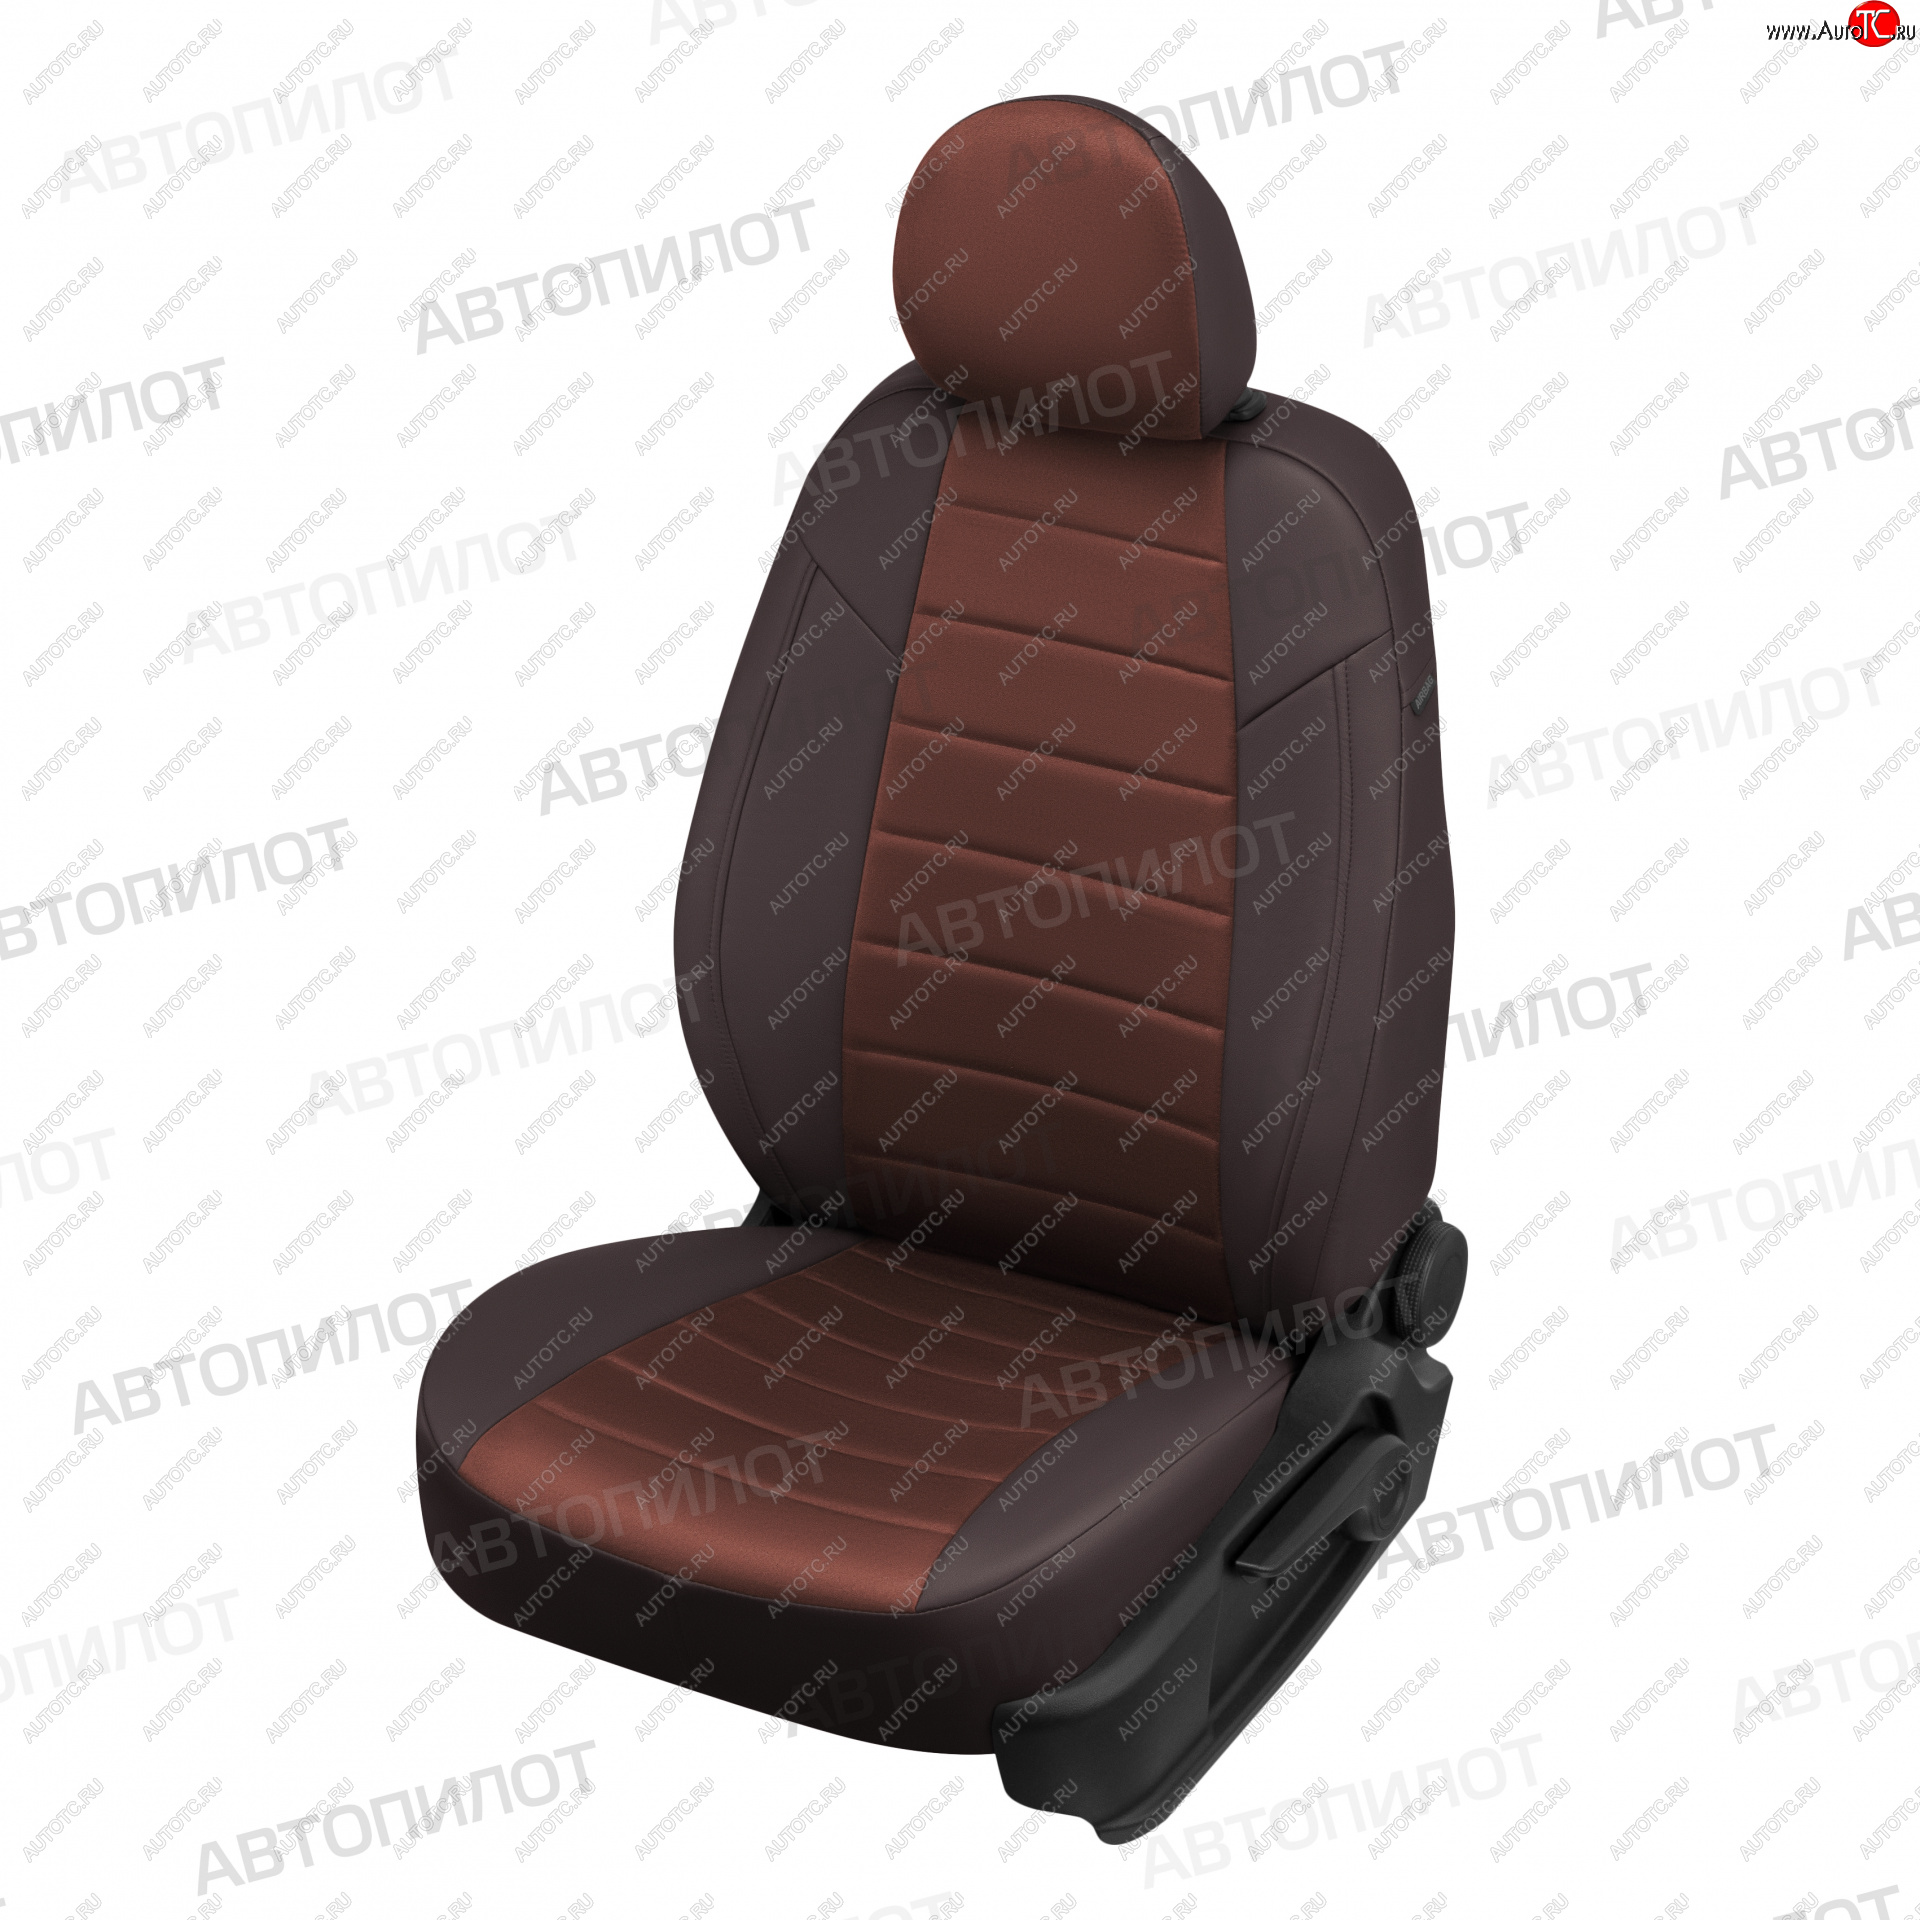 13 449 р. Чехлы сидений (экокожа/алькантара) Автопилот  Hyundai I40  1 VF (2011-2019) (шоколад)